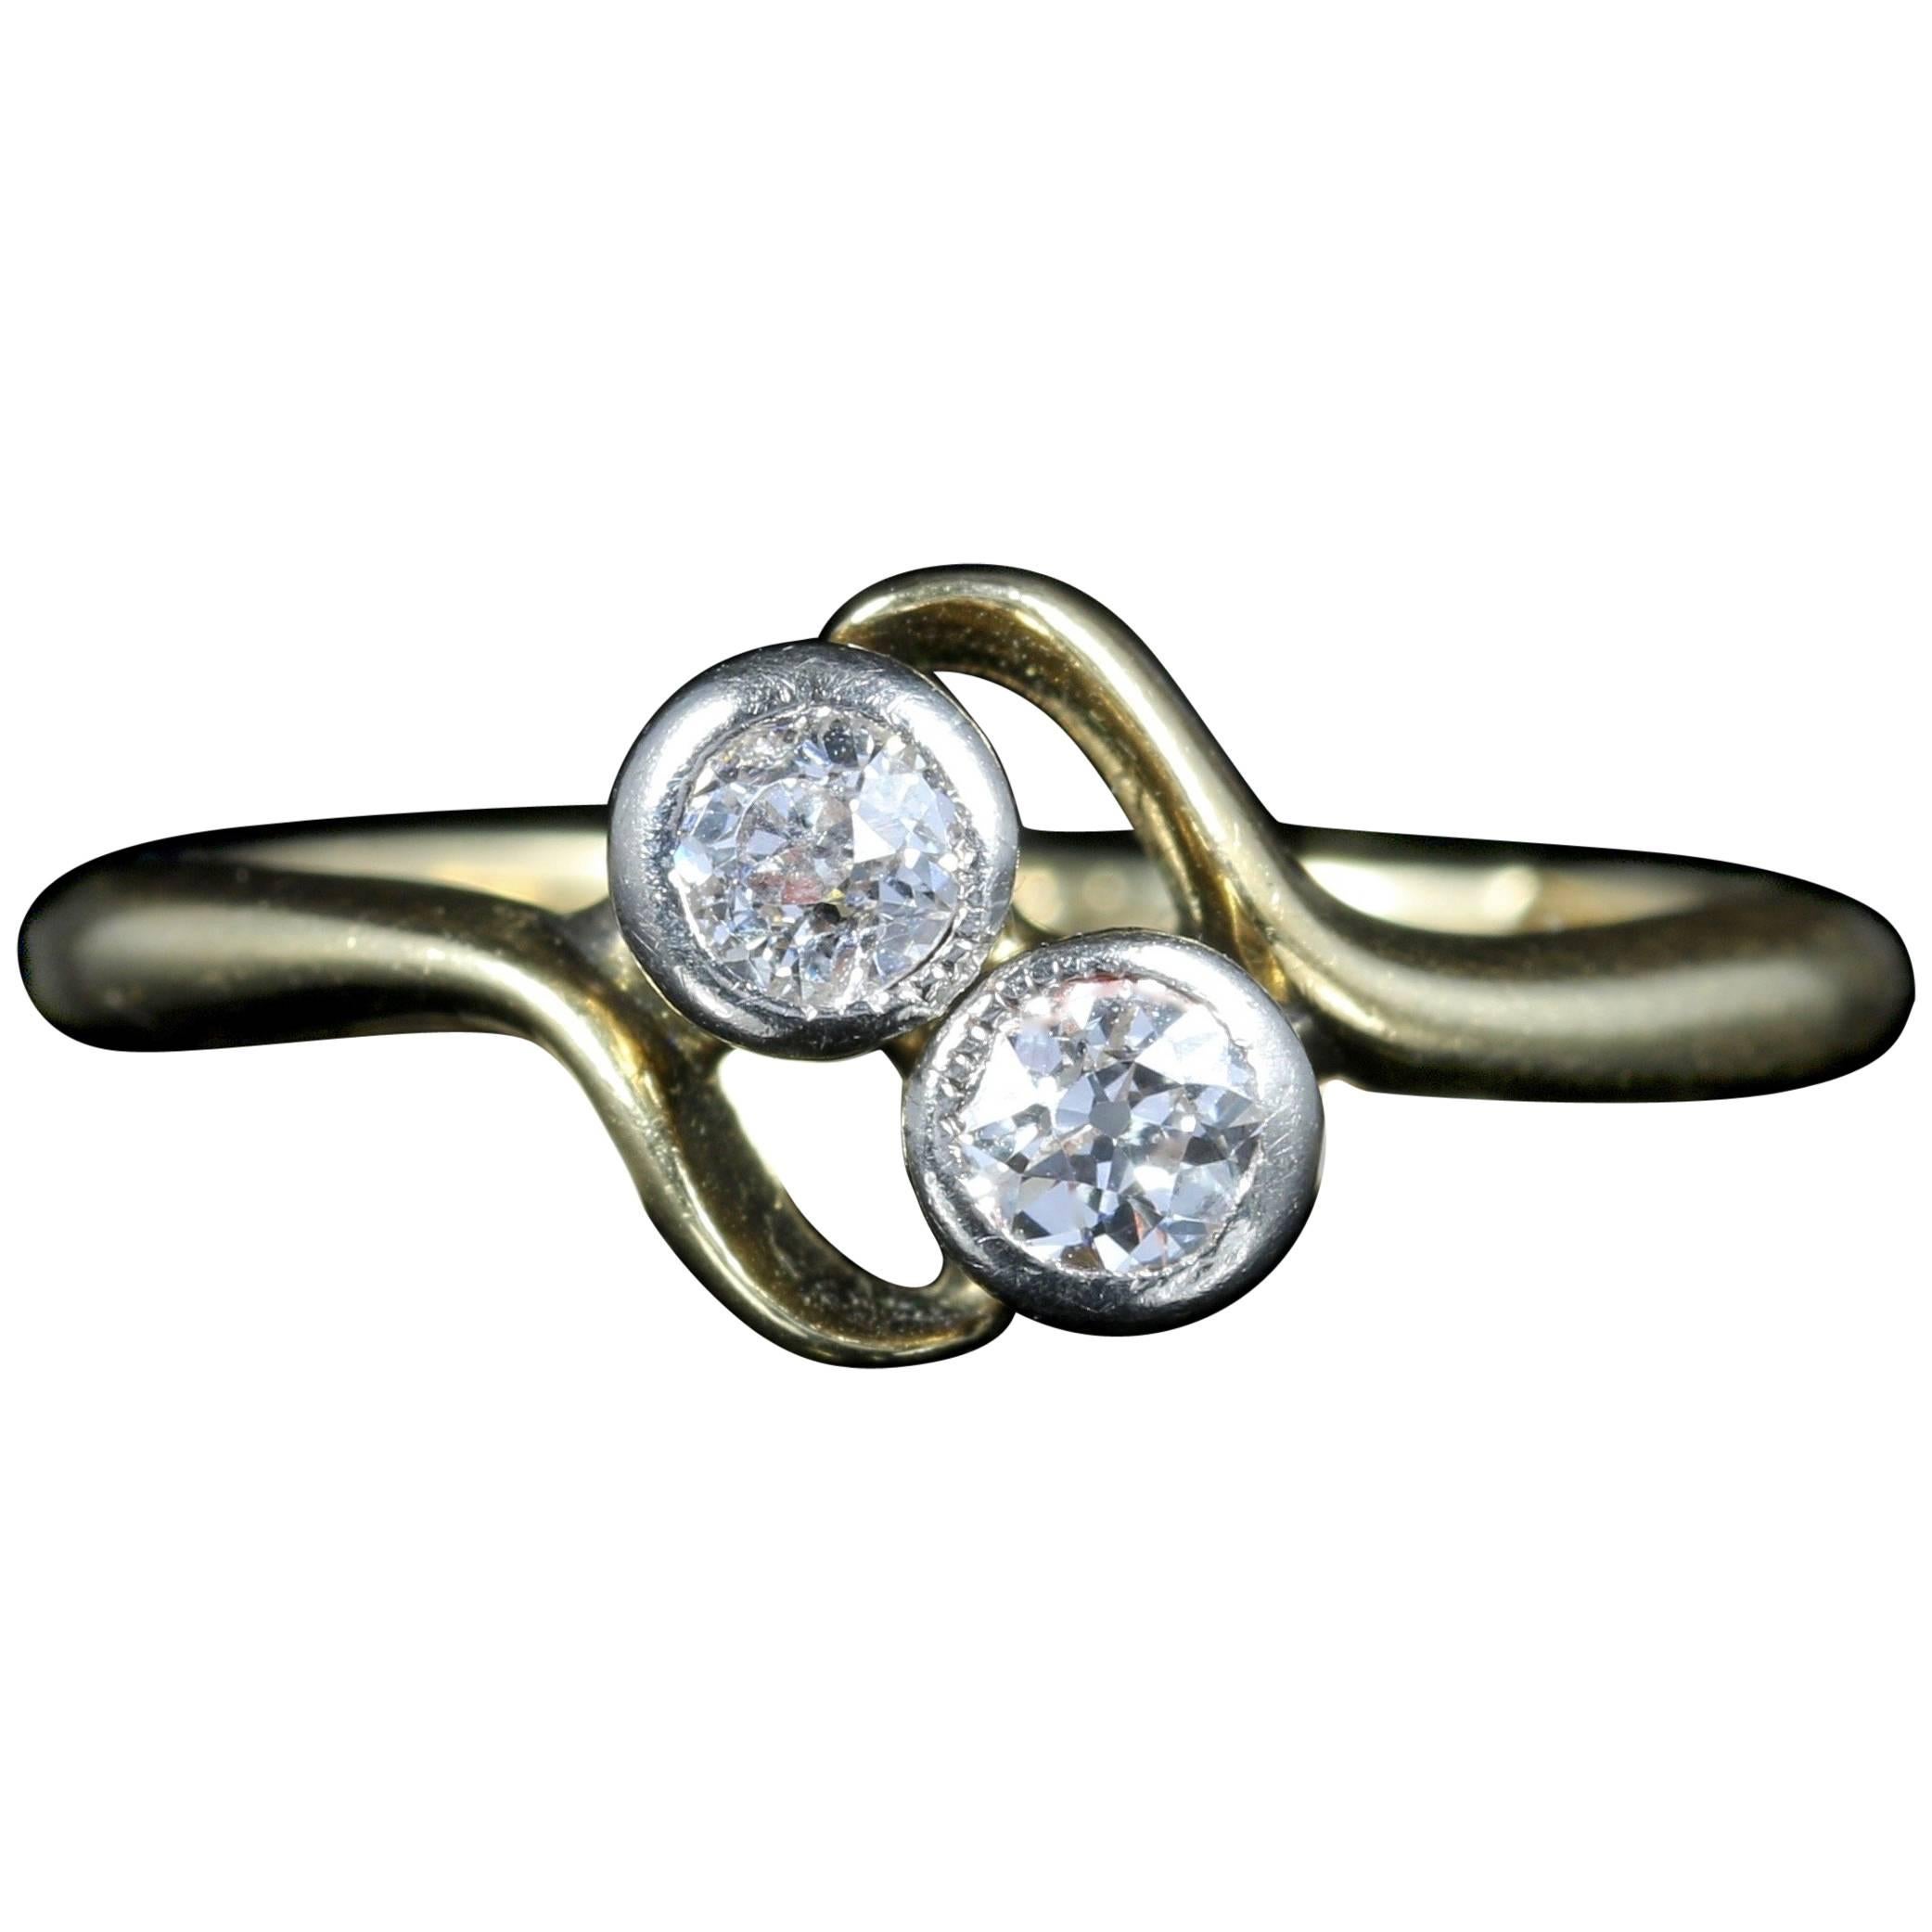 Antique Edwardian Diamond Twist Ring circa 1900 18 Carat Gold